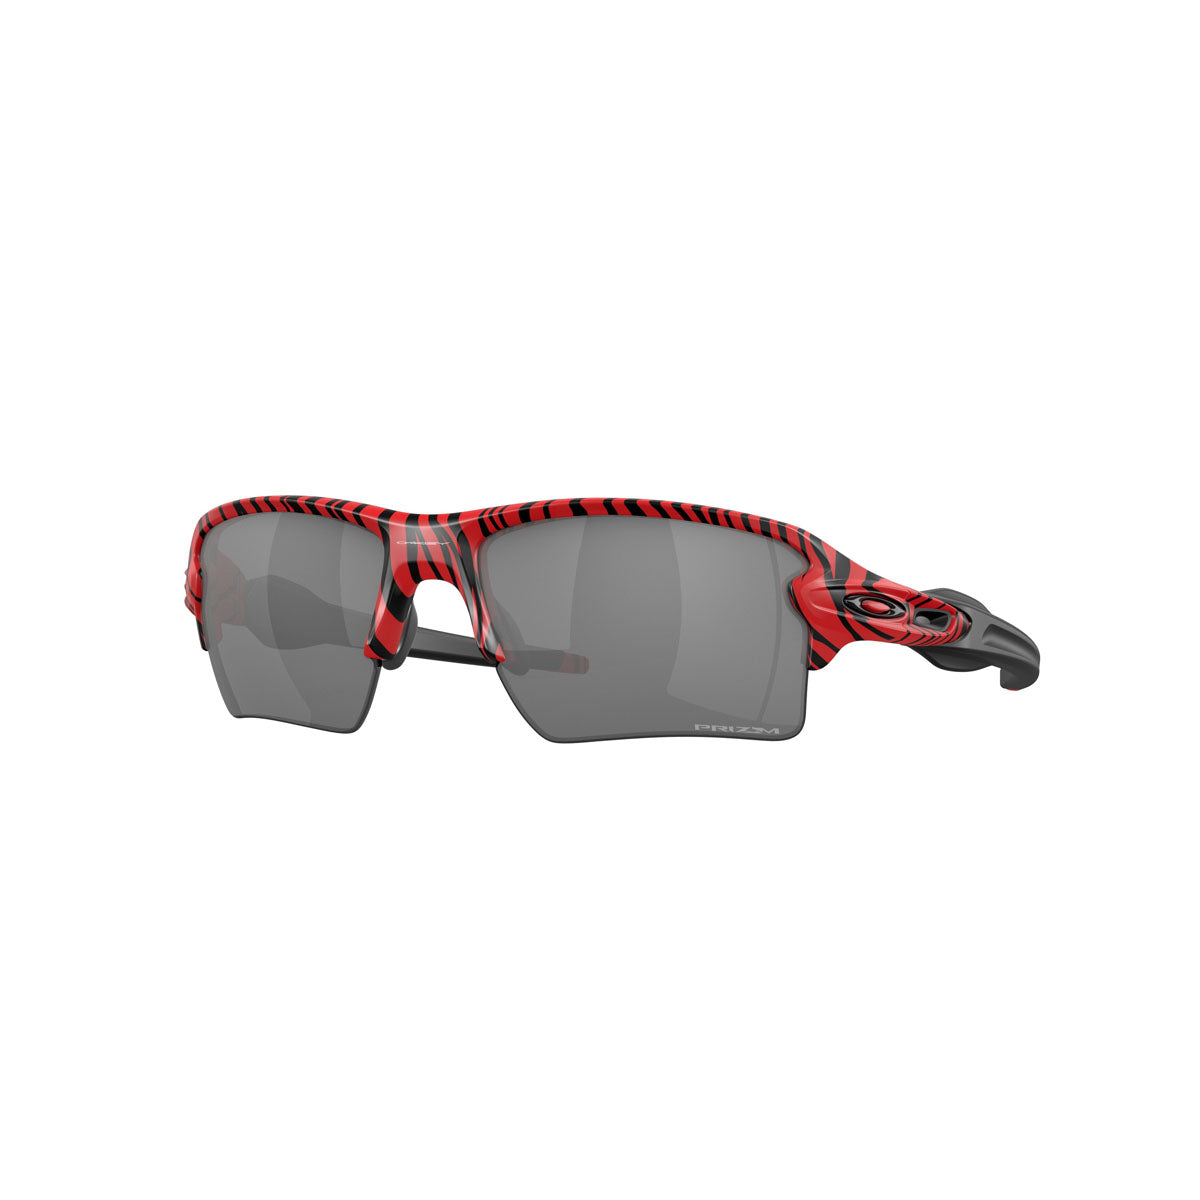 Oakley Flak 2.0 XL Sunglasses - Red Tiger/Prizm Black